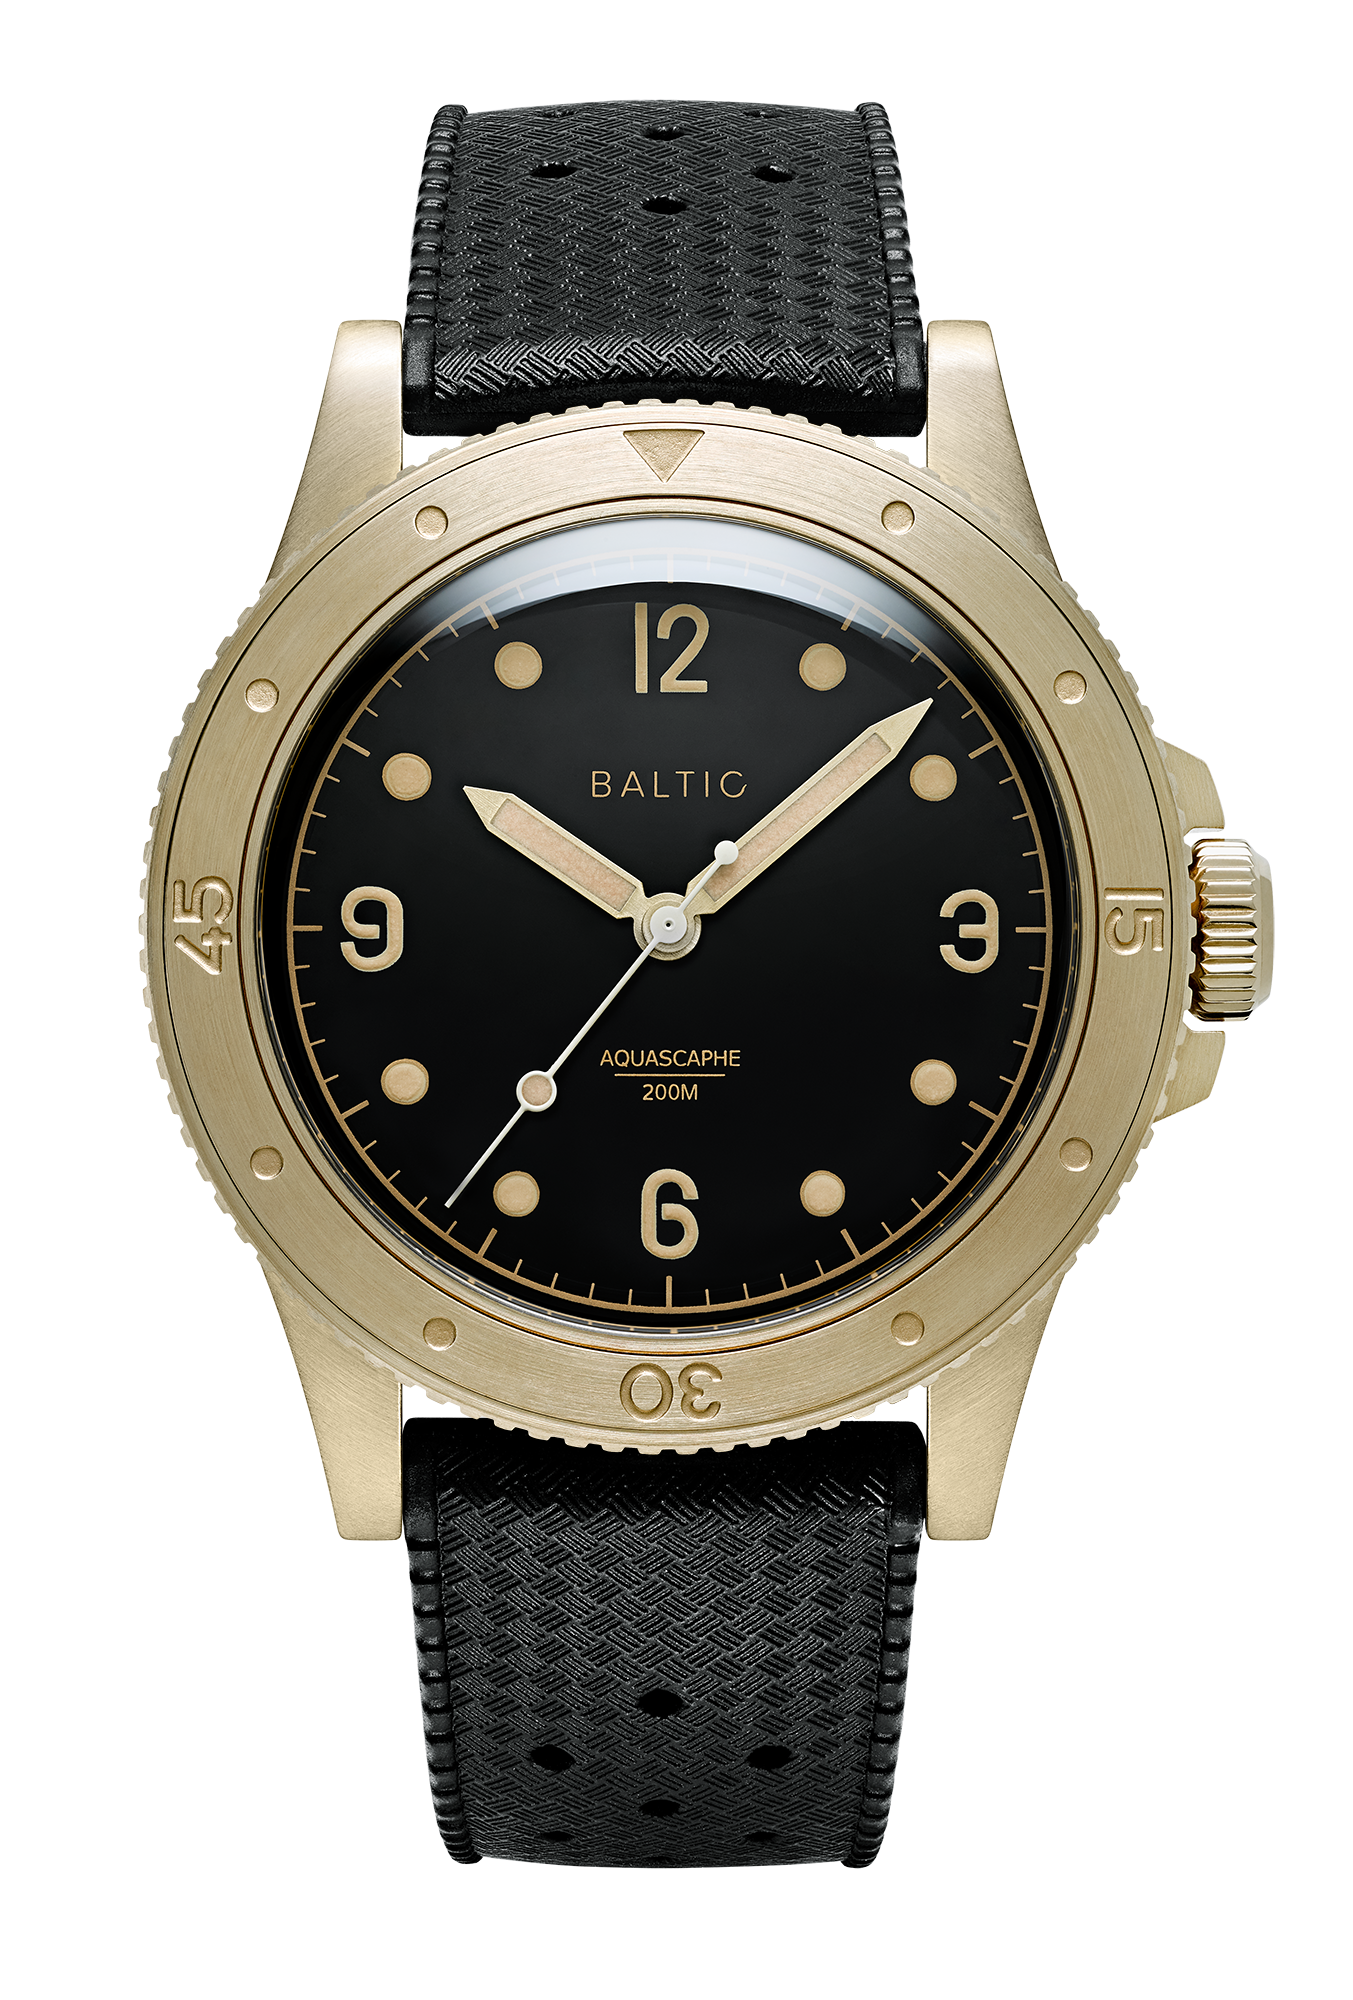 Aquascaphe Bronze Noir - Baltic Watches